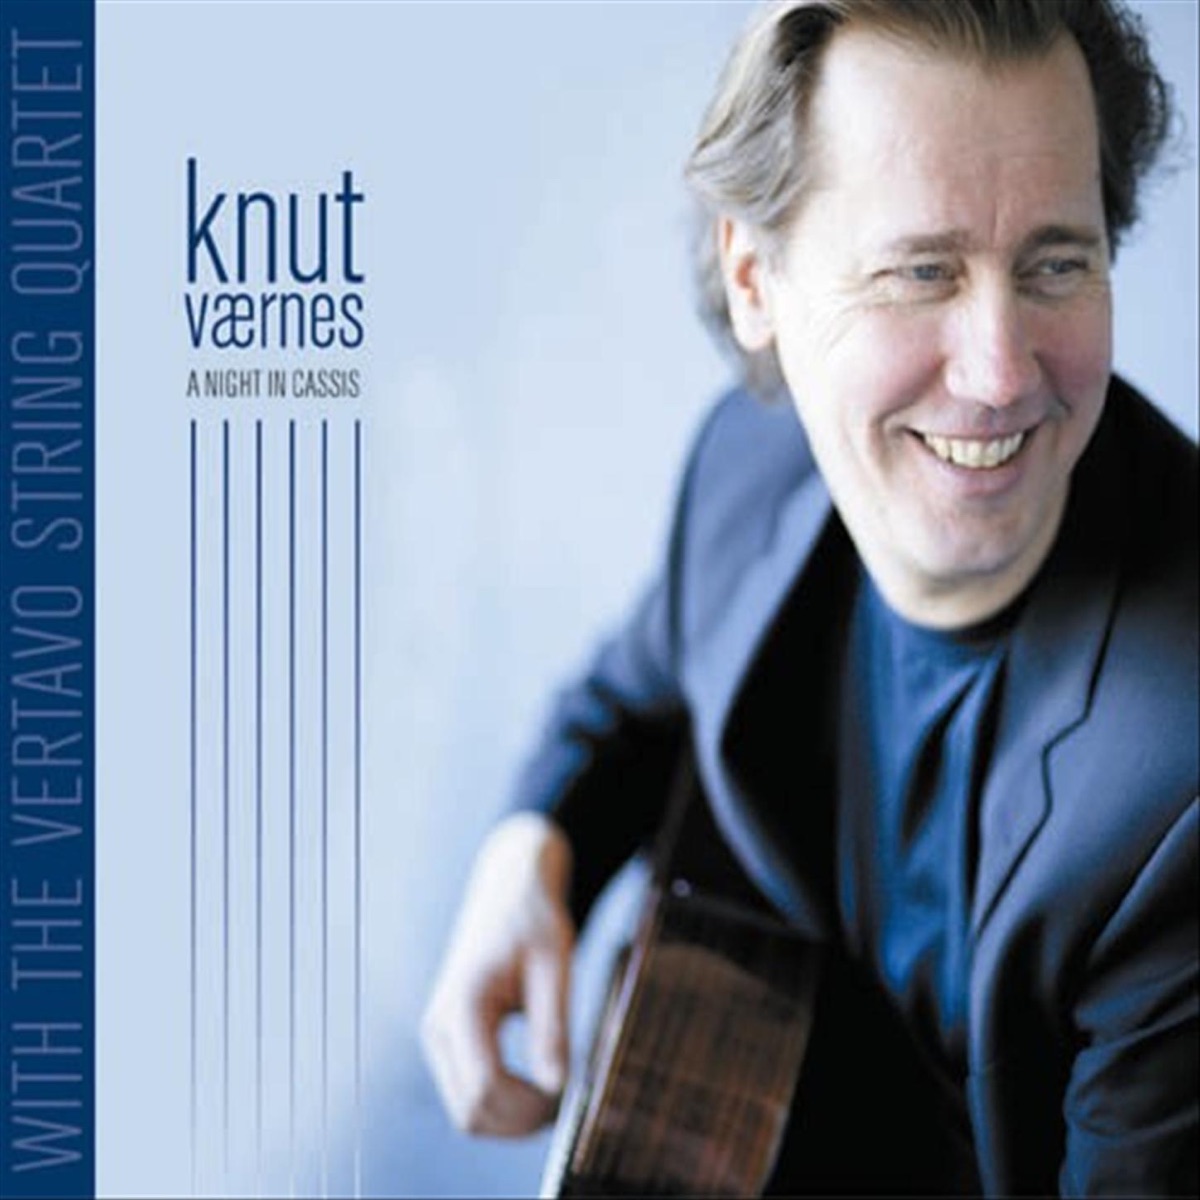 Kjell Habbestad: Quattro Stazioni. Album of Vertavo String